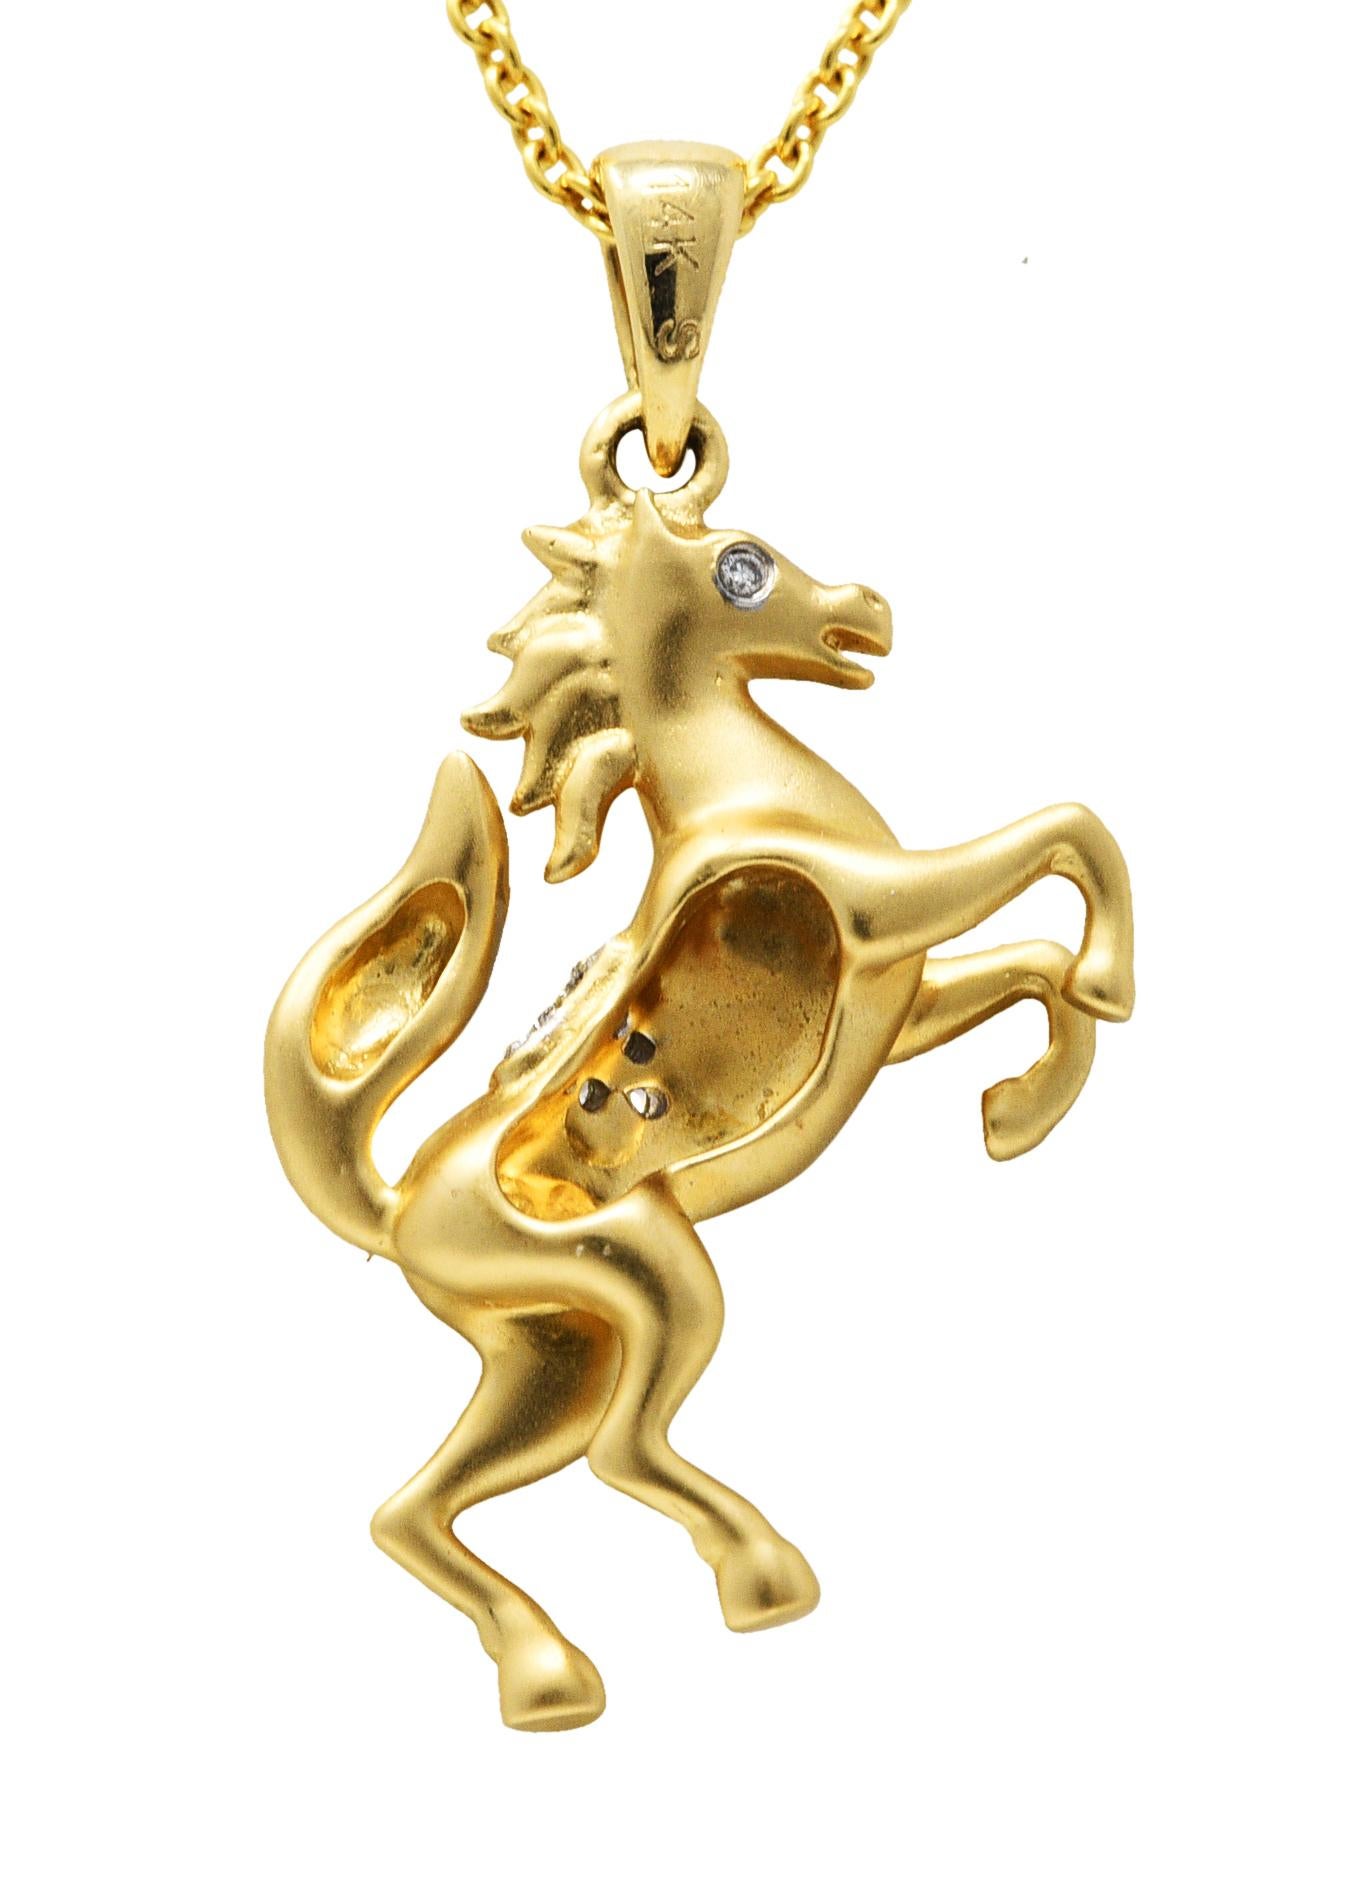 Brilliant Cut Contemporary Diamond 14 Karat Two-Tone Gold Horse Pendant Necklace